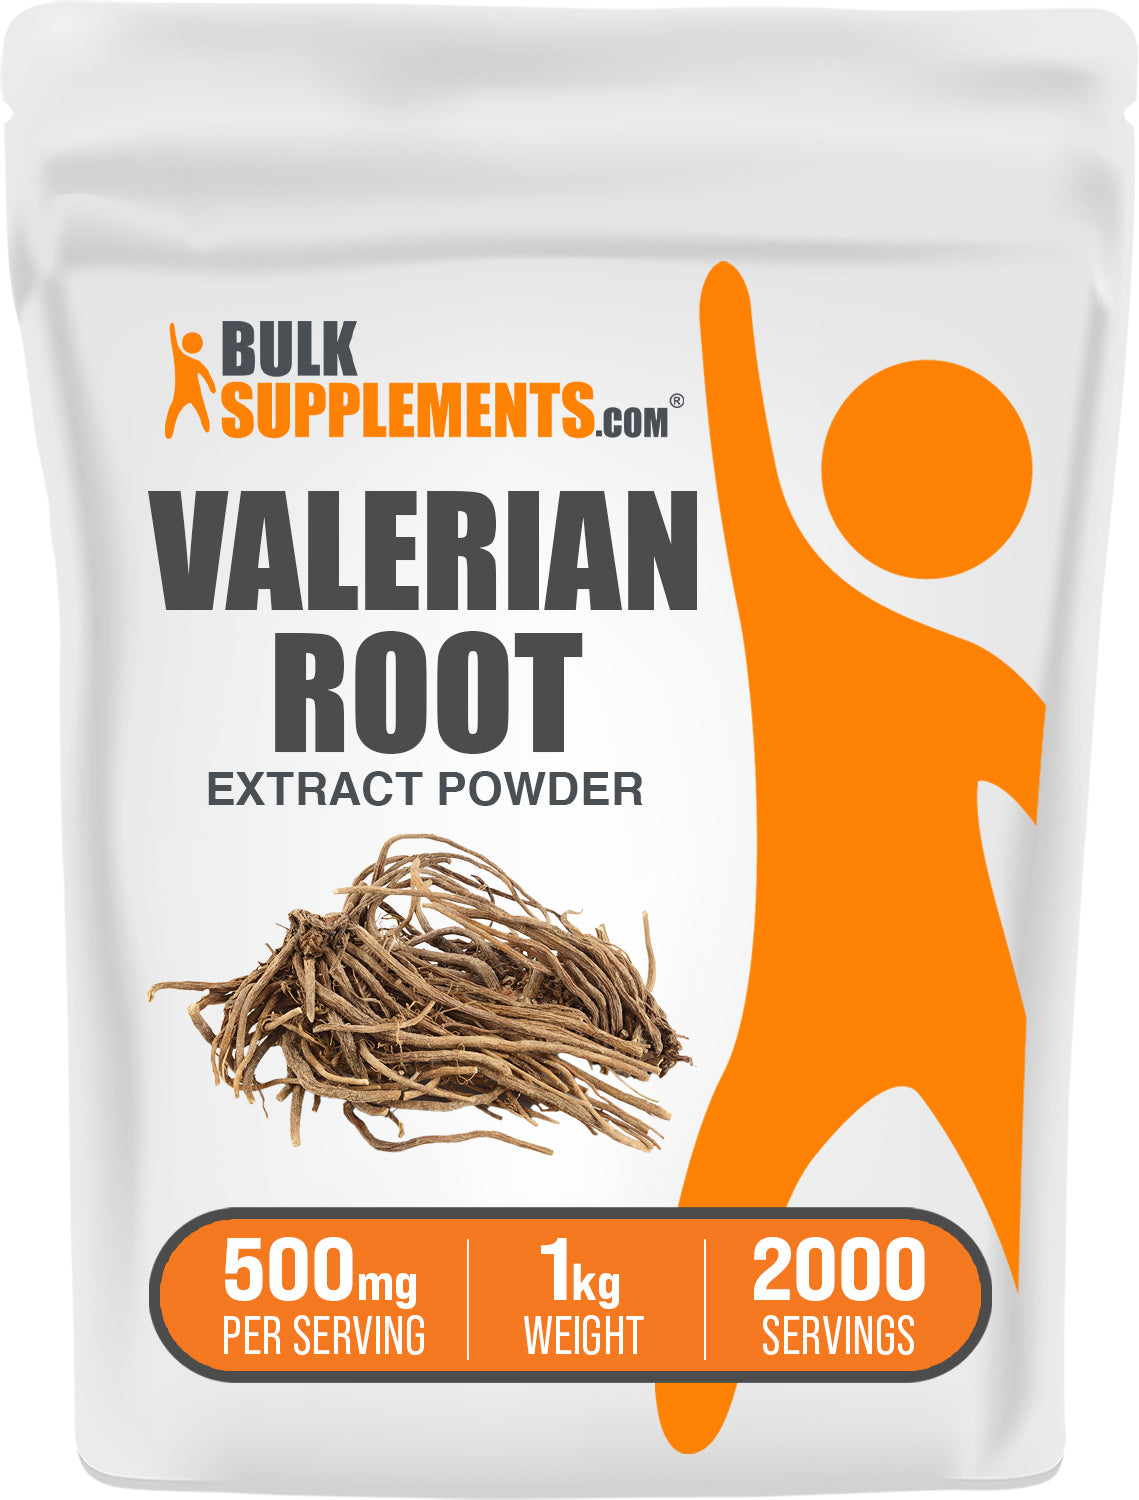 BulkSupplements Valerian Root Extract Powder 1kg bag